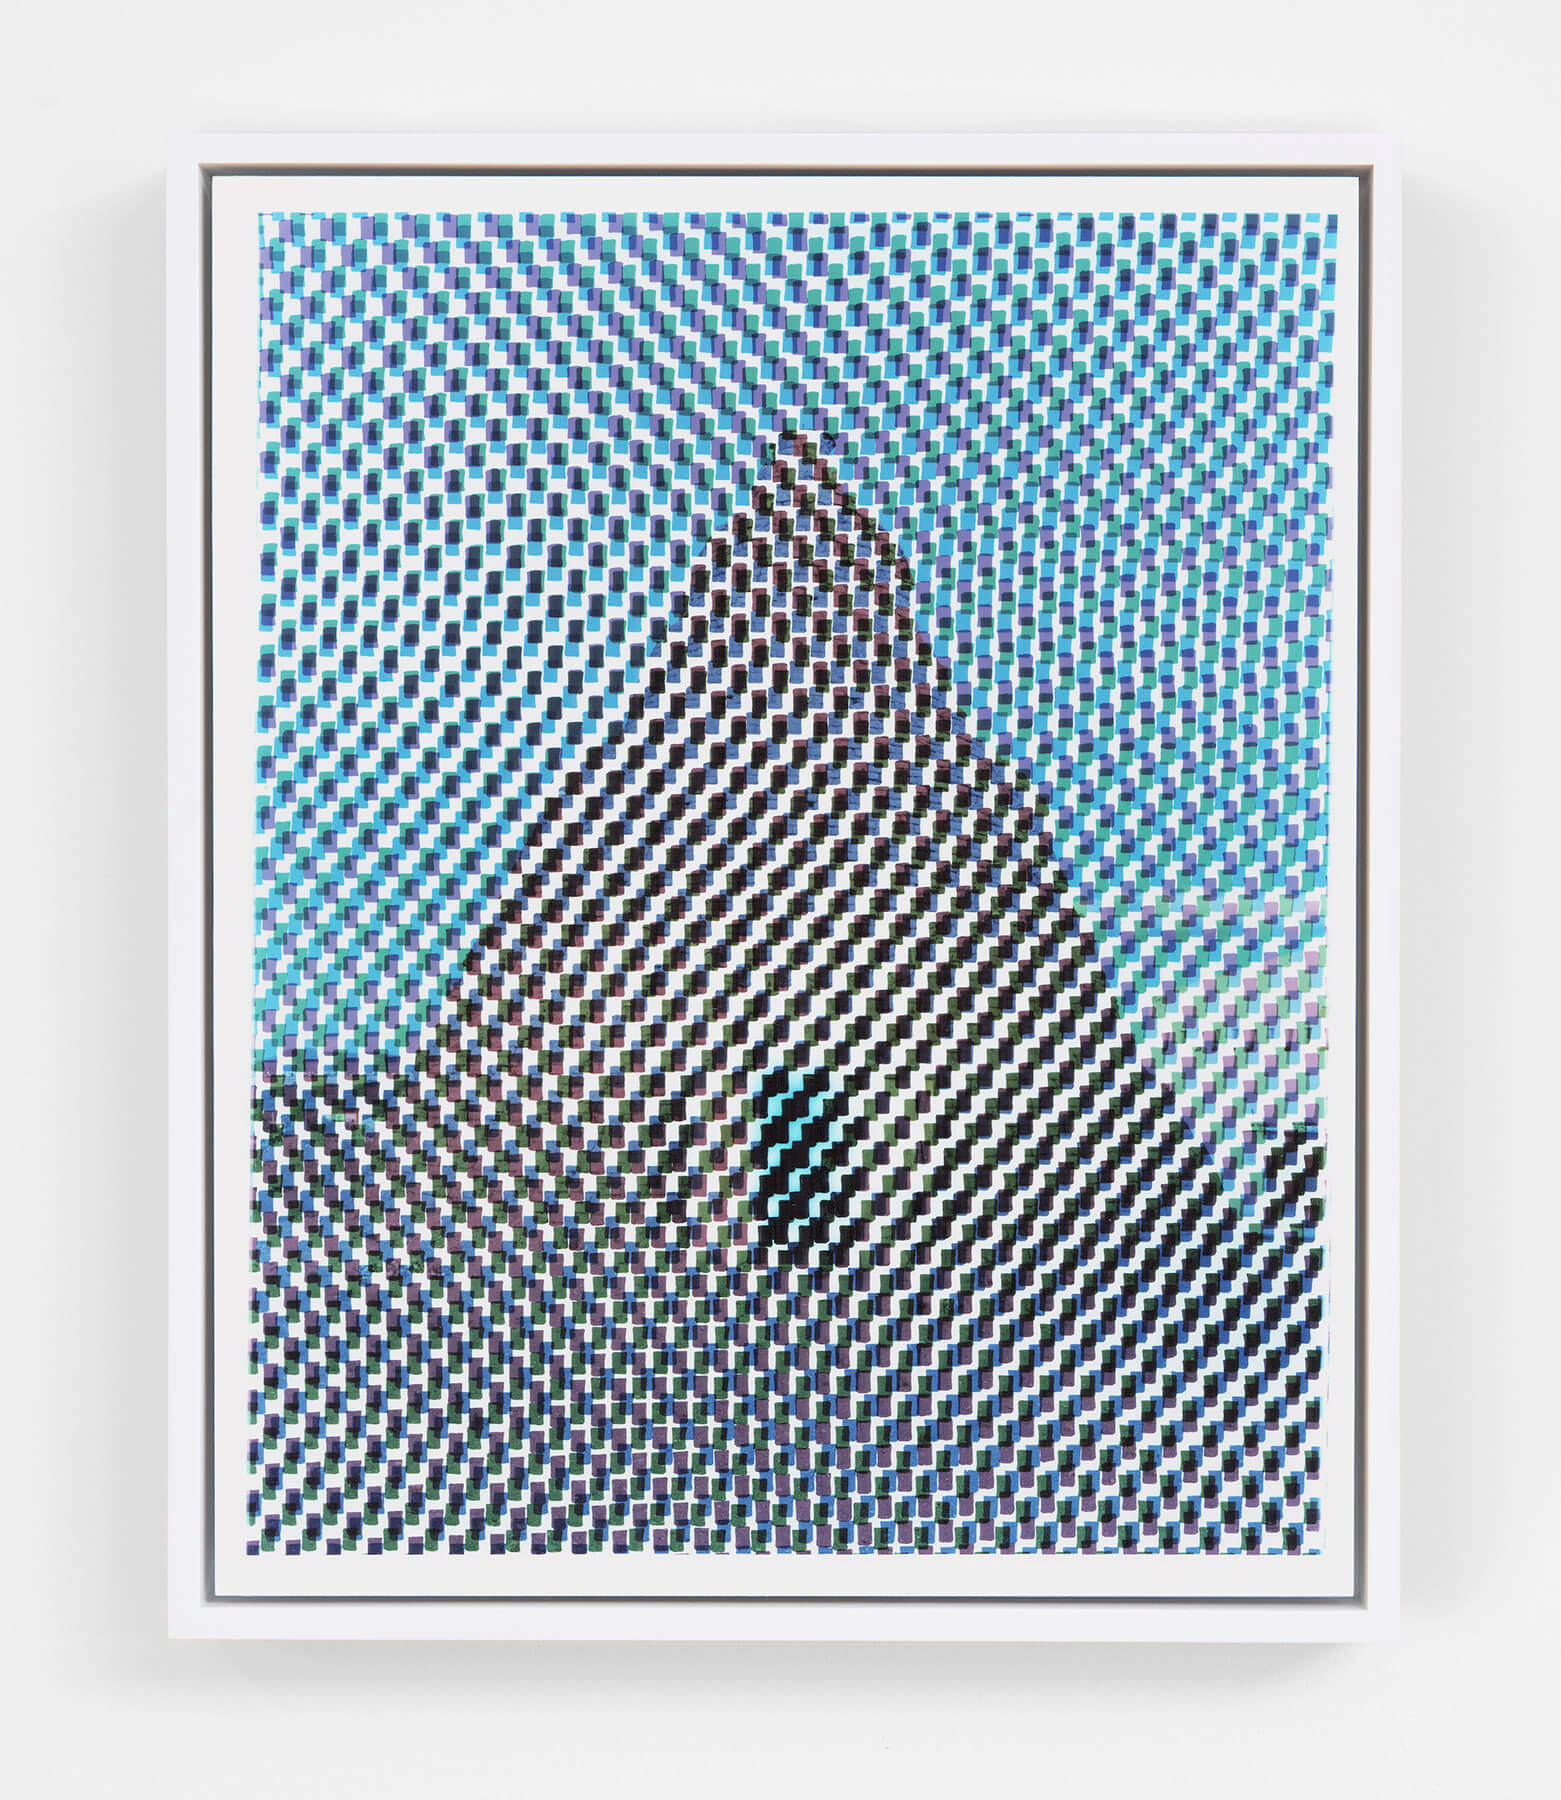 Livia Corona Benjamin
                                        'Infinite Rewrite XIV', 2015
                                        10 1/2 x 8 1/2 Inches
                                        unique analog C-print
                                        